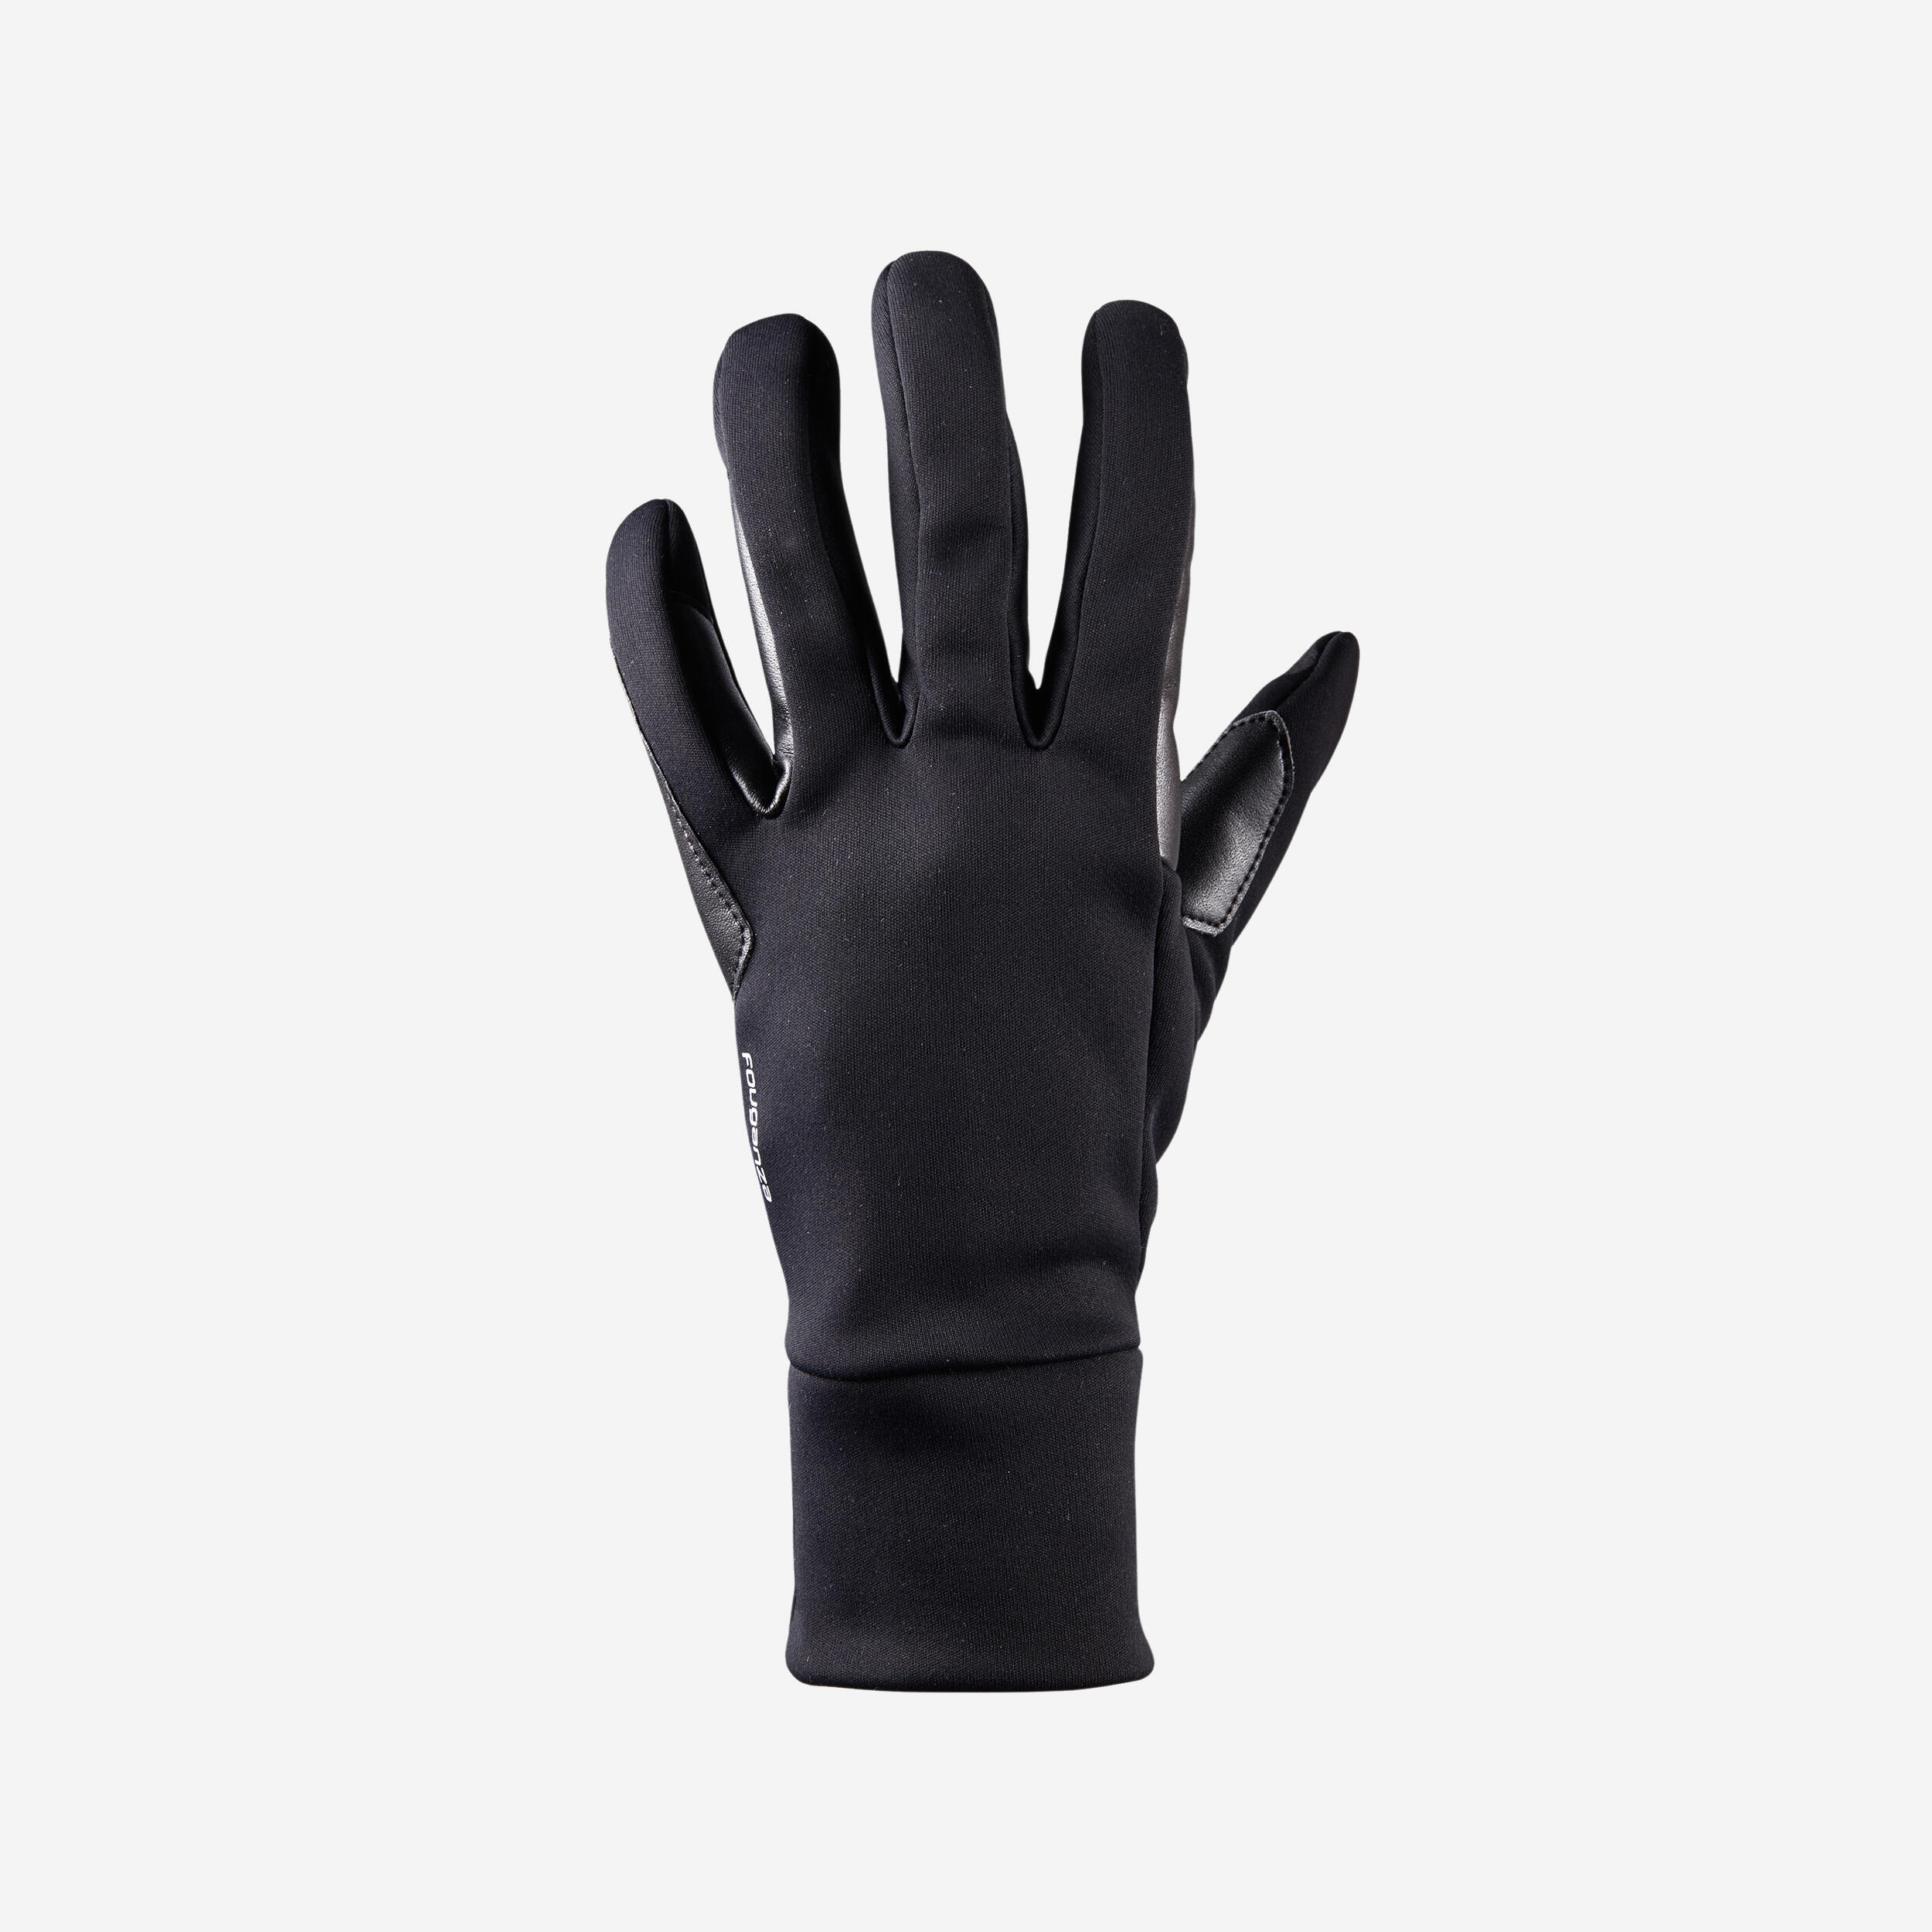 100 Warm Women's Horse Riding Gloves - Black 1/7